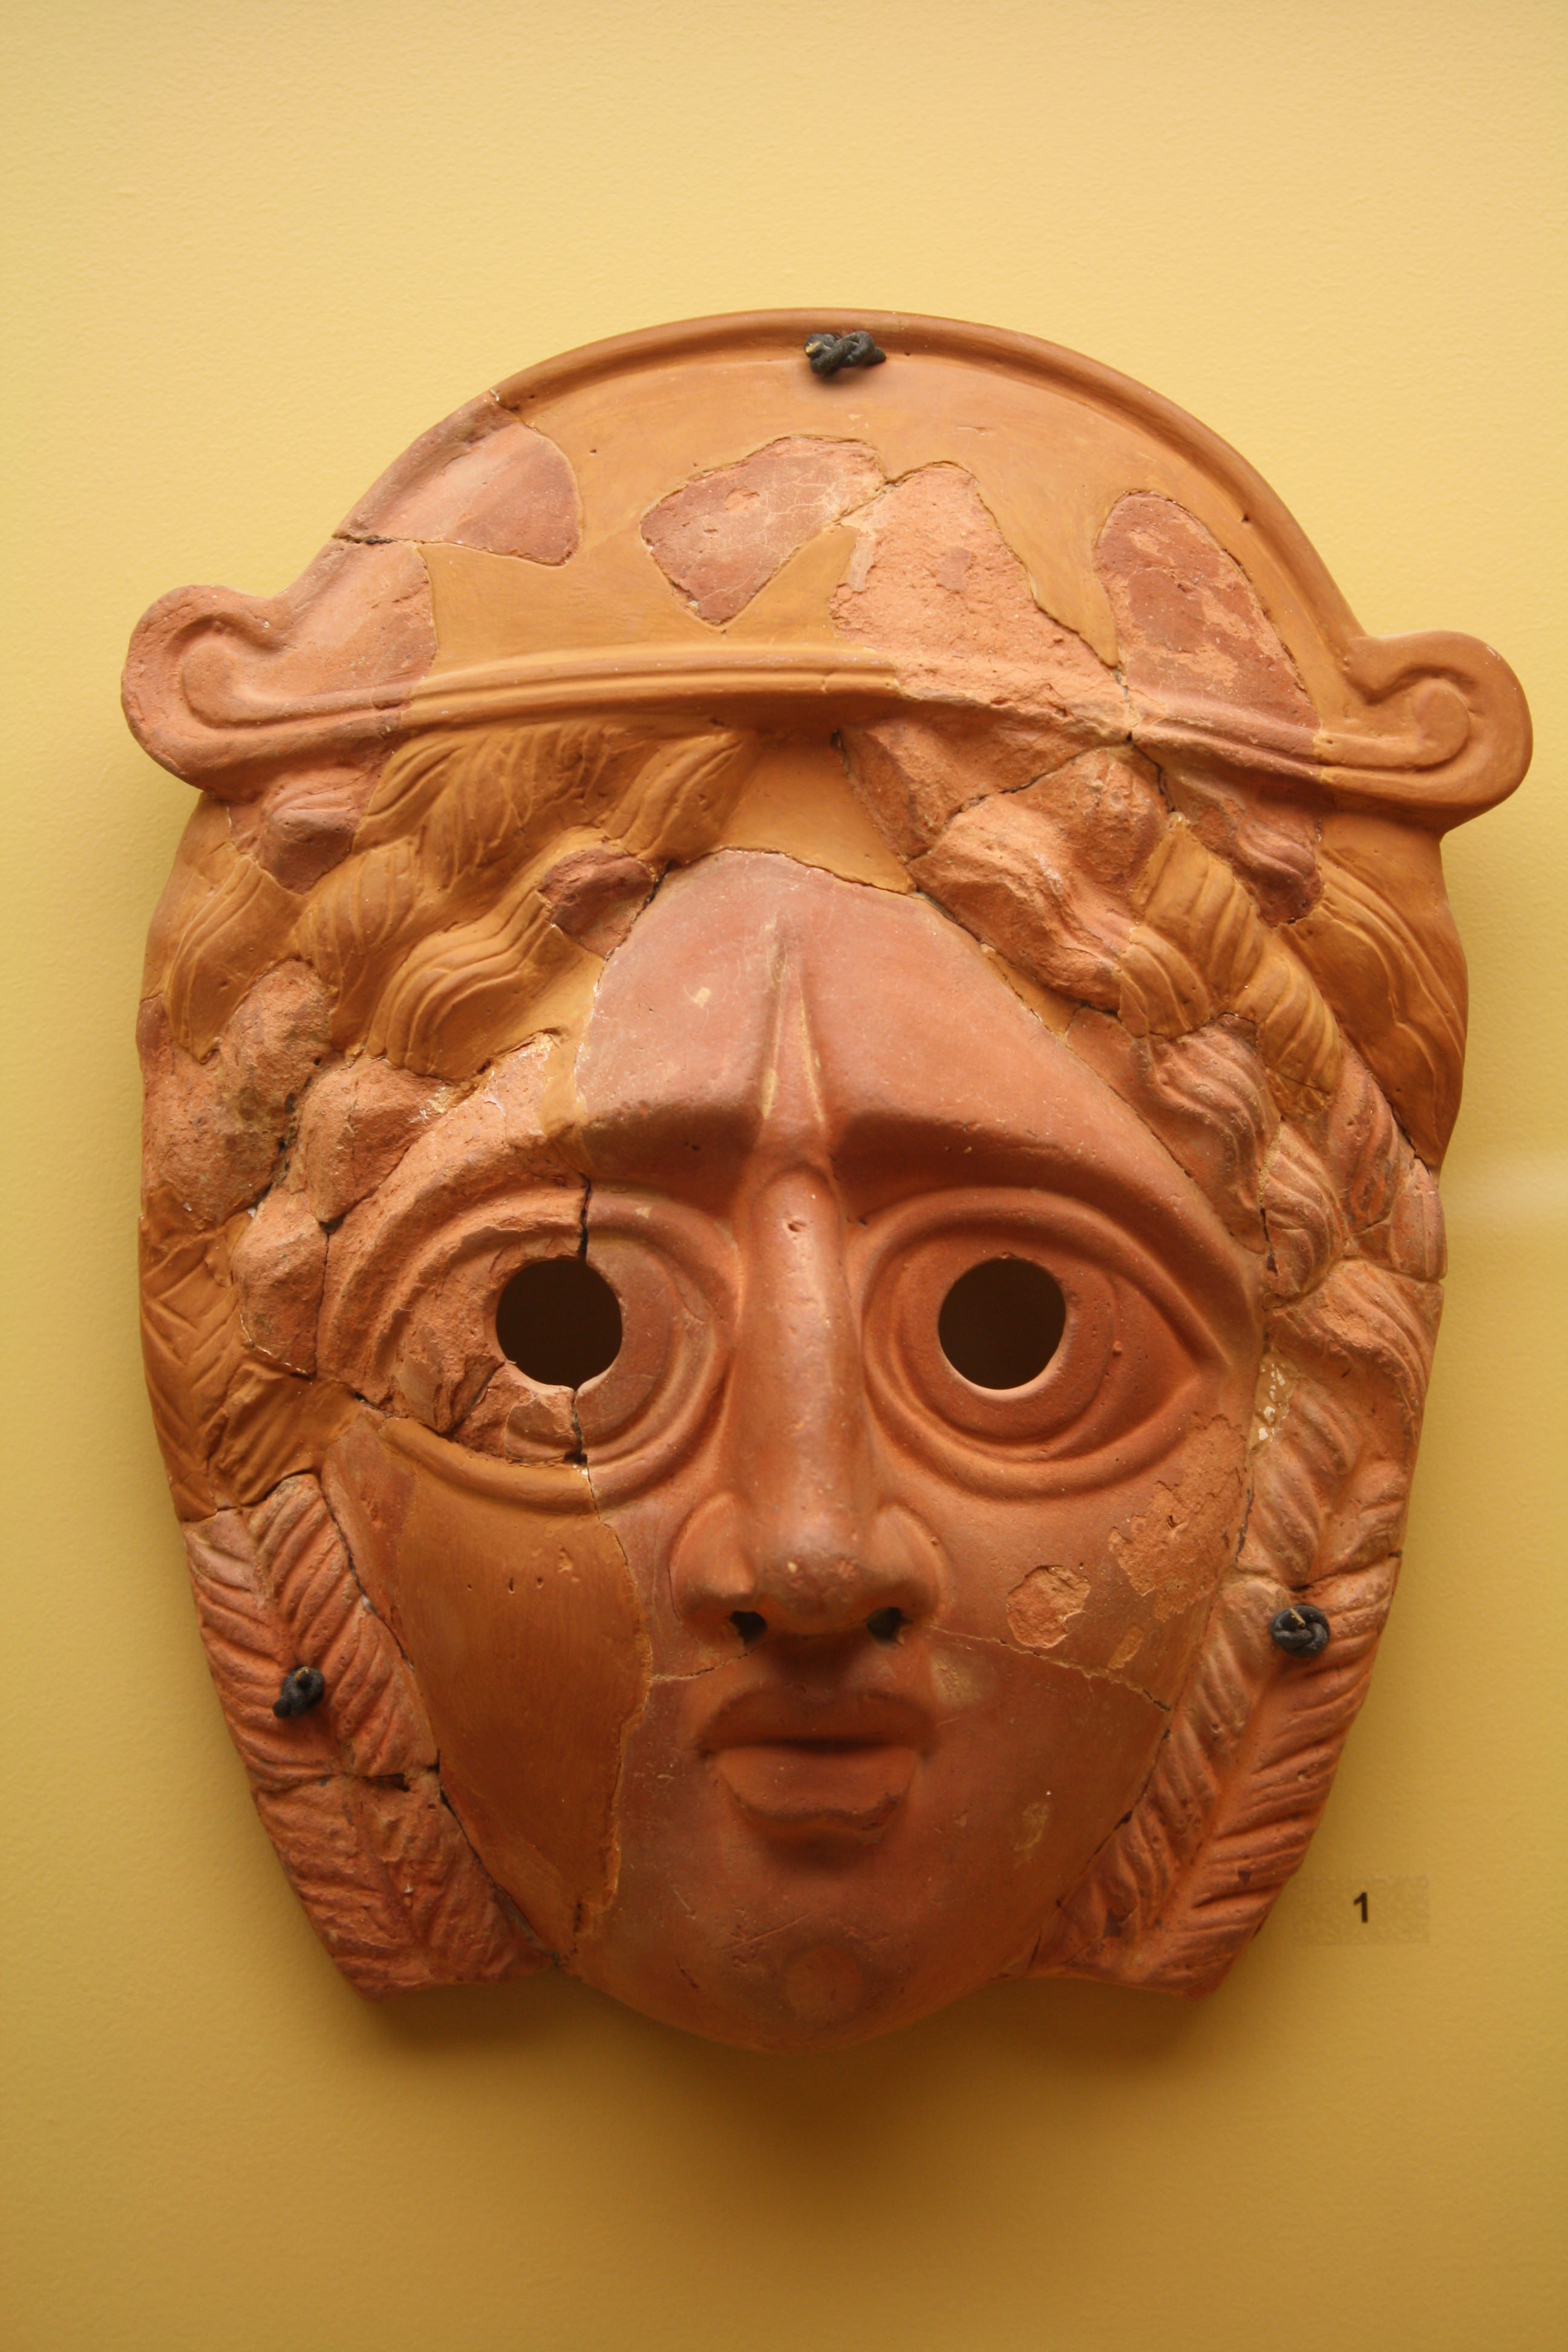 Greek Theatre Masks craft activity guide